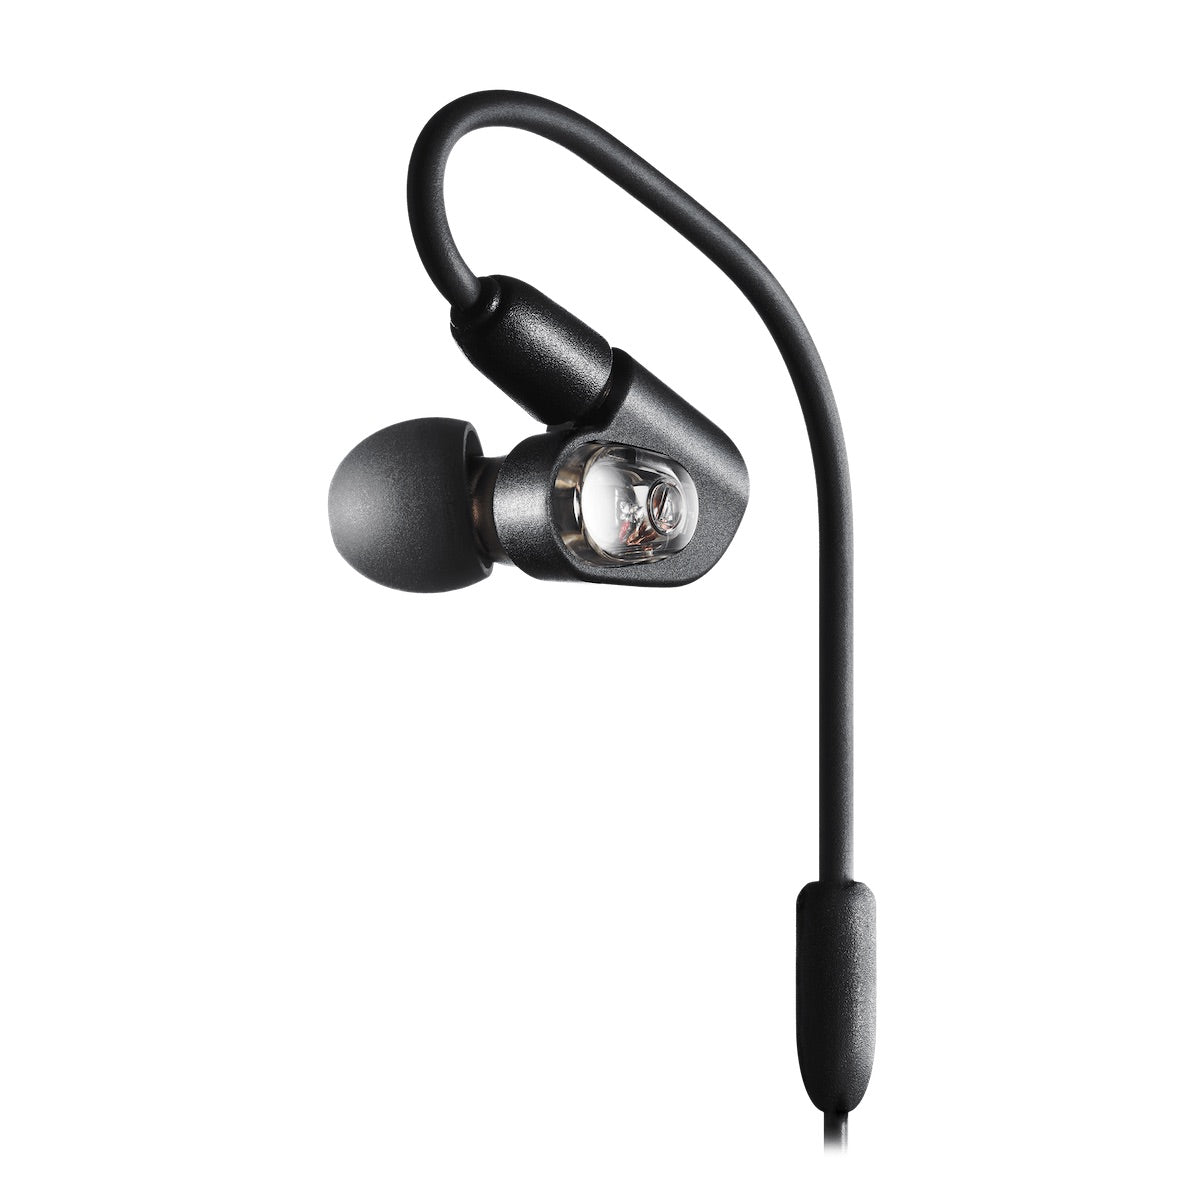 Audio-Technica ATH-E50 - Professional In-Ear Monitor Headphones, detail